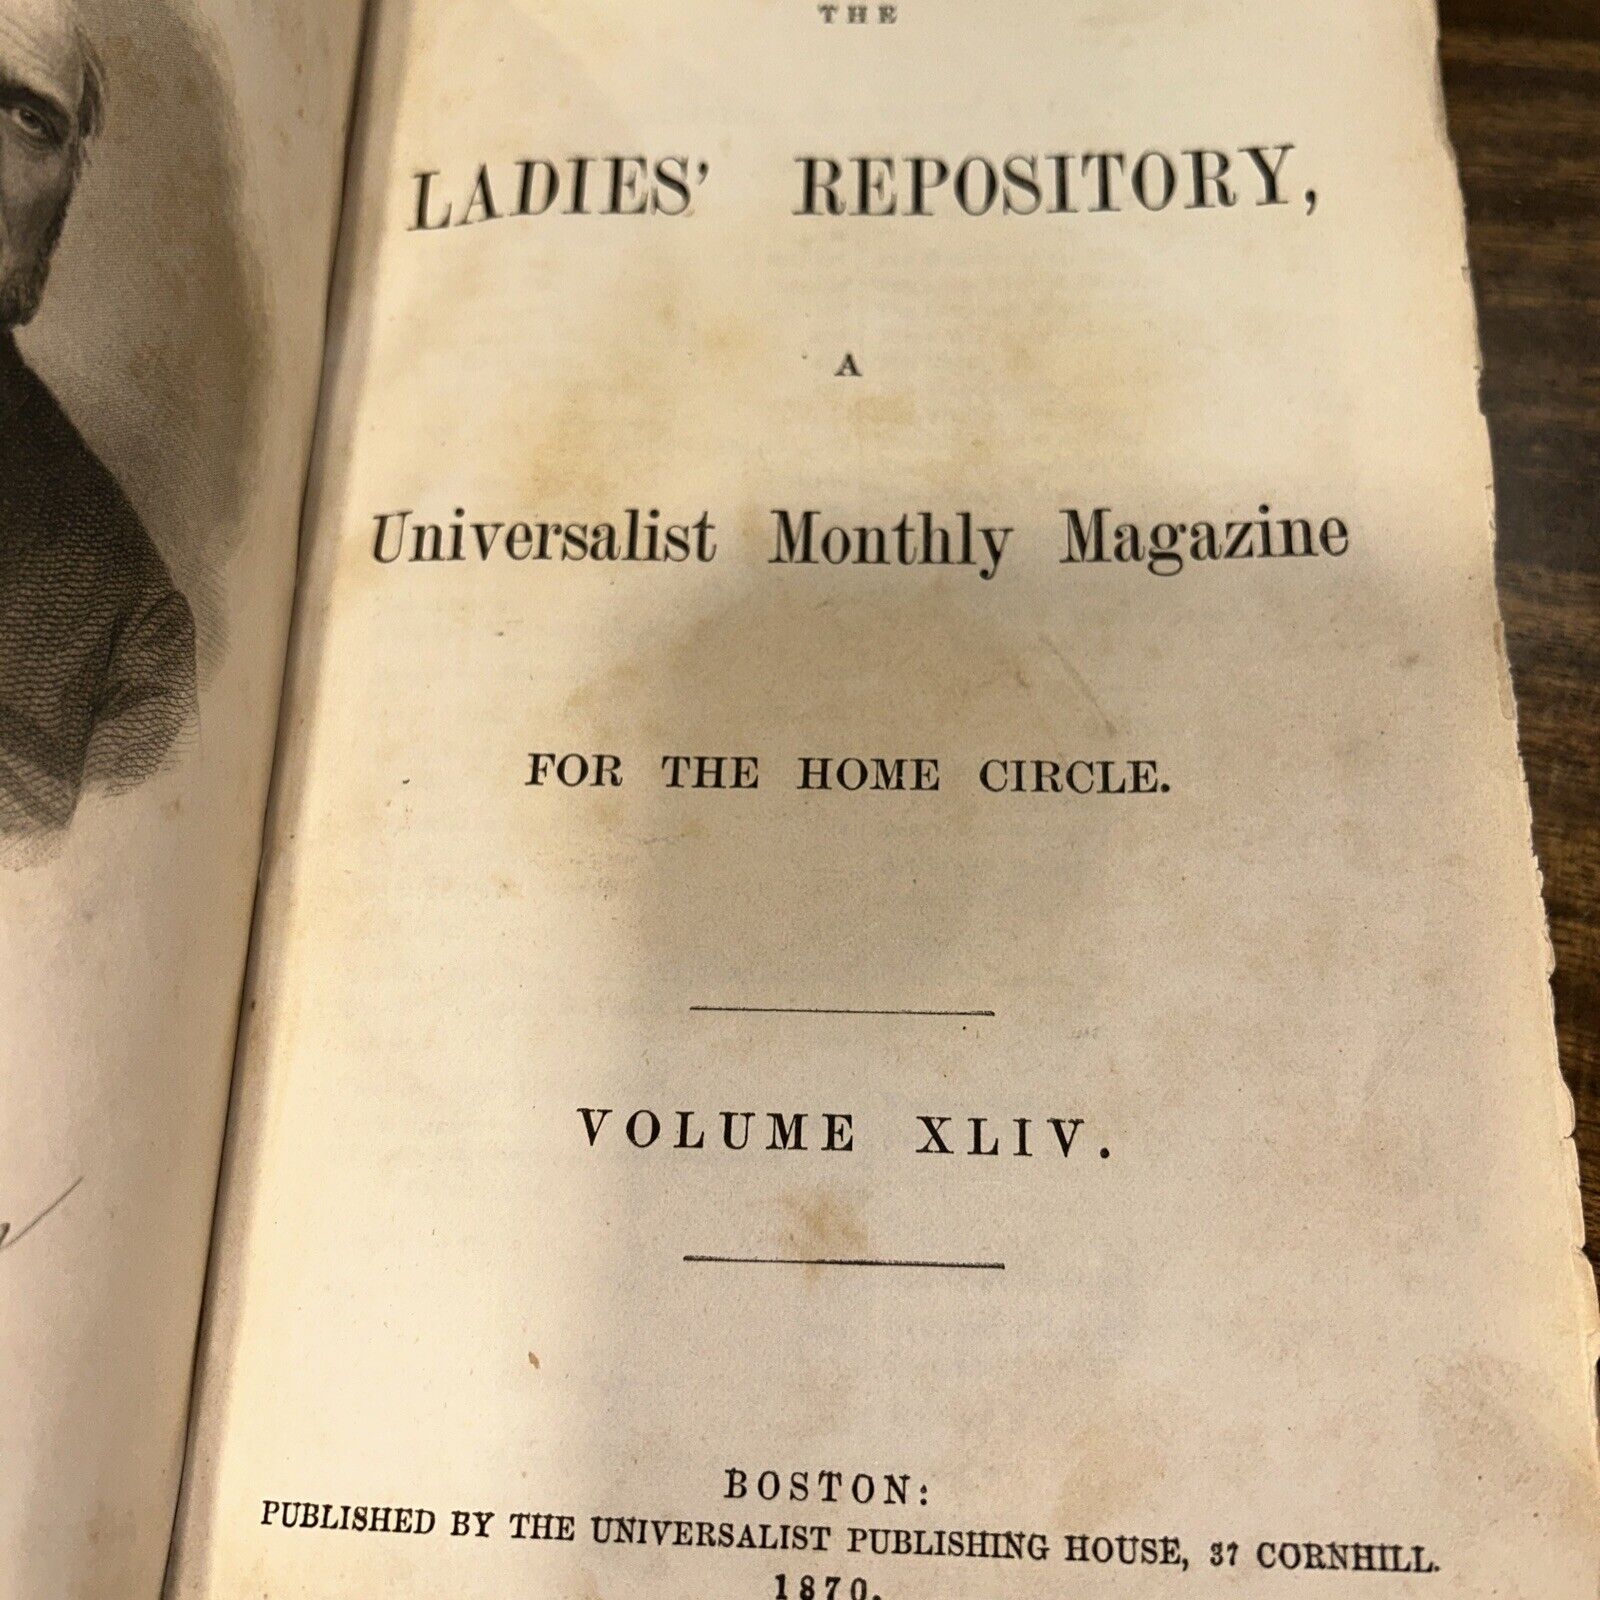 THE LADIES' REPOSITORY Universalist Monthly Magazine, JANUARY 1863 C. Sawyer